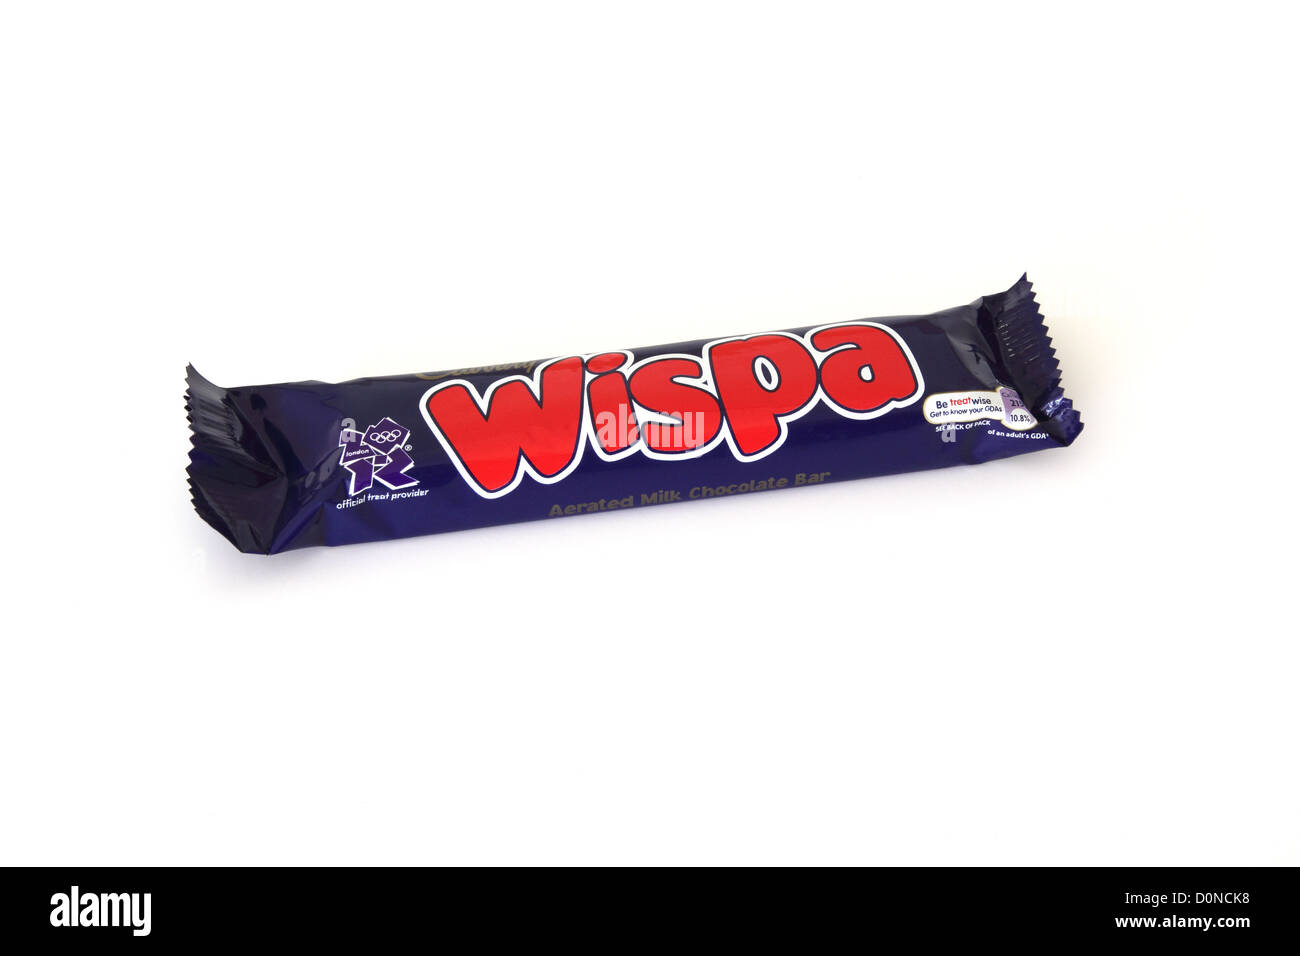 Cadbury's Wispa Bar on a White Background Stock Photo